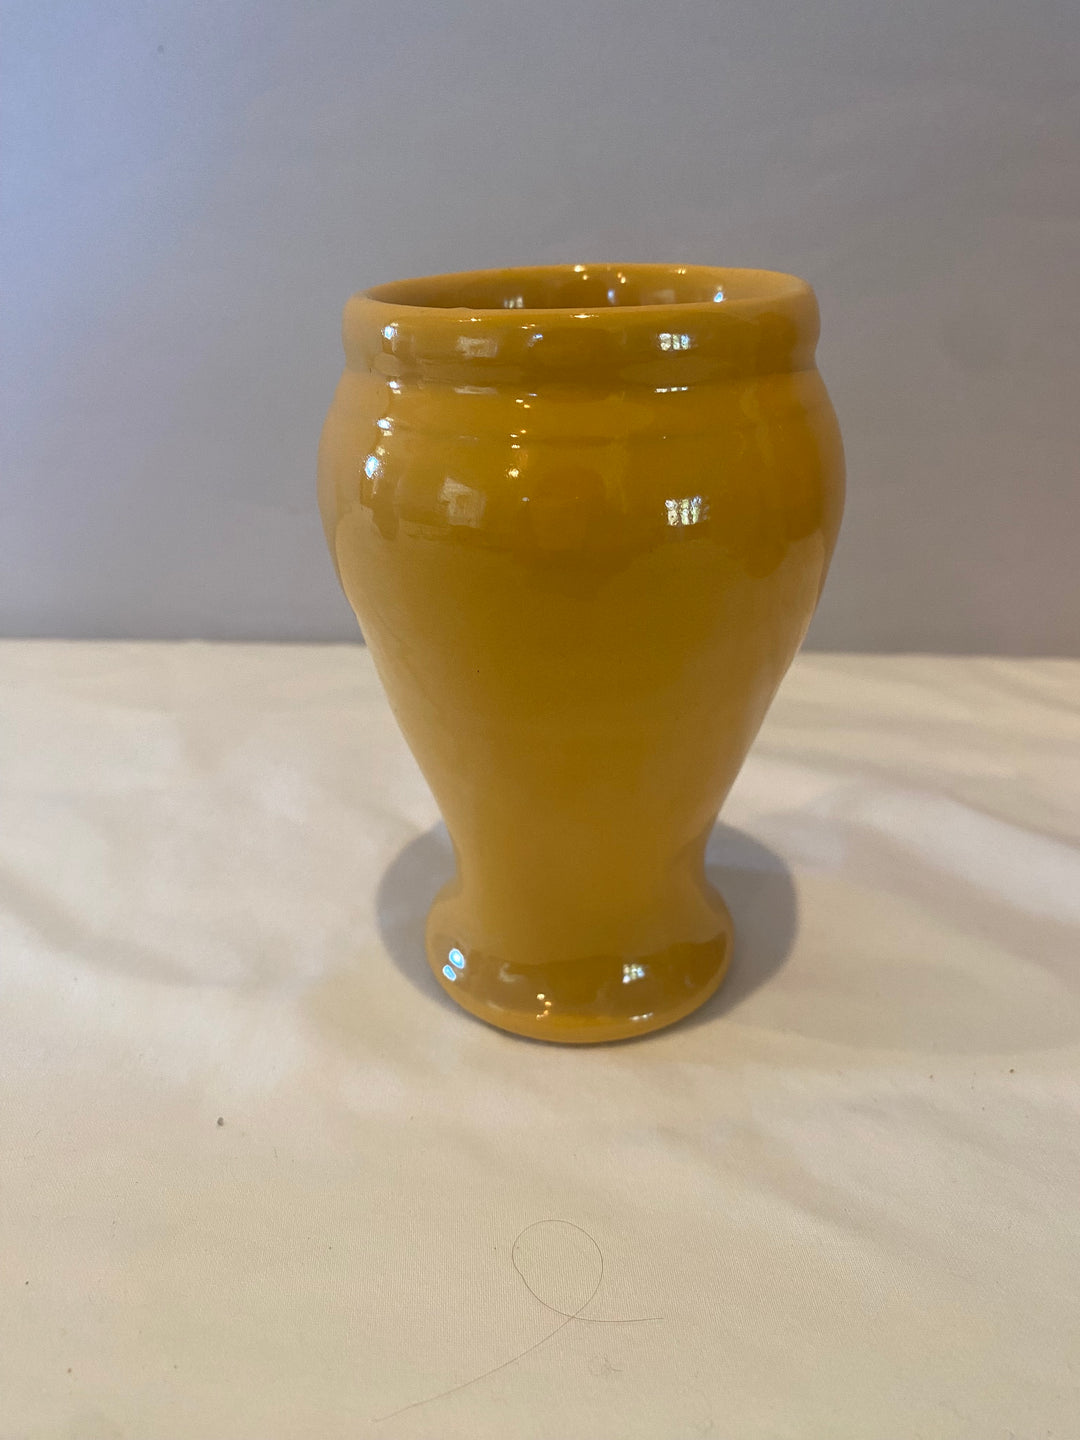 Bauer California Vase, Smallest "mini" size, Yellow glaze